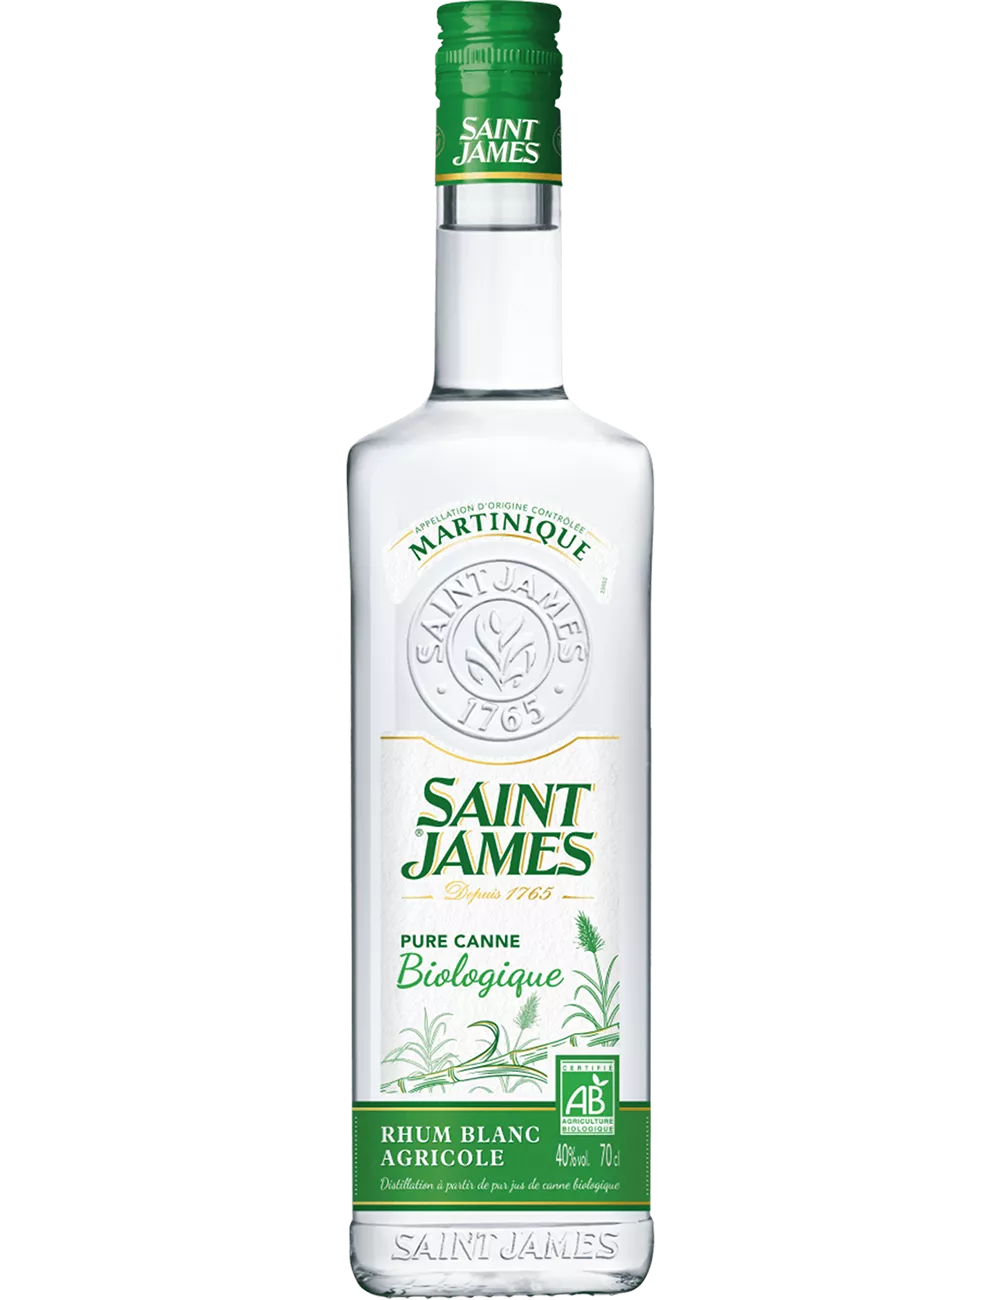 Saint James - Bio - Rhum blanc agricole